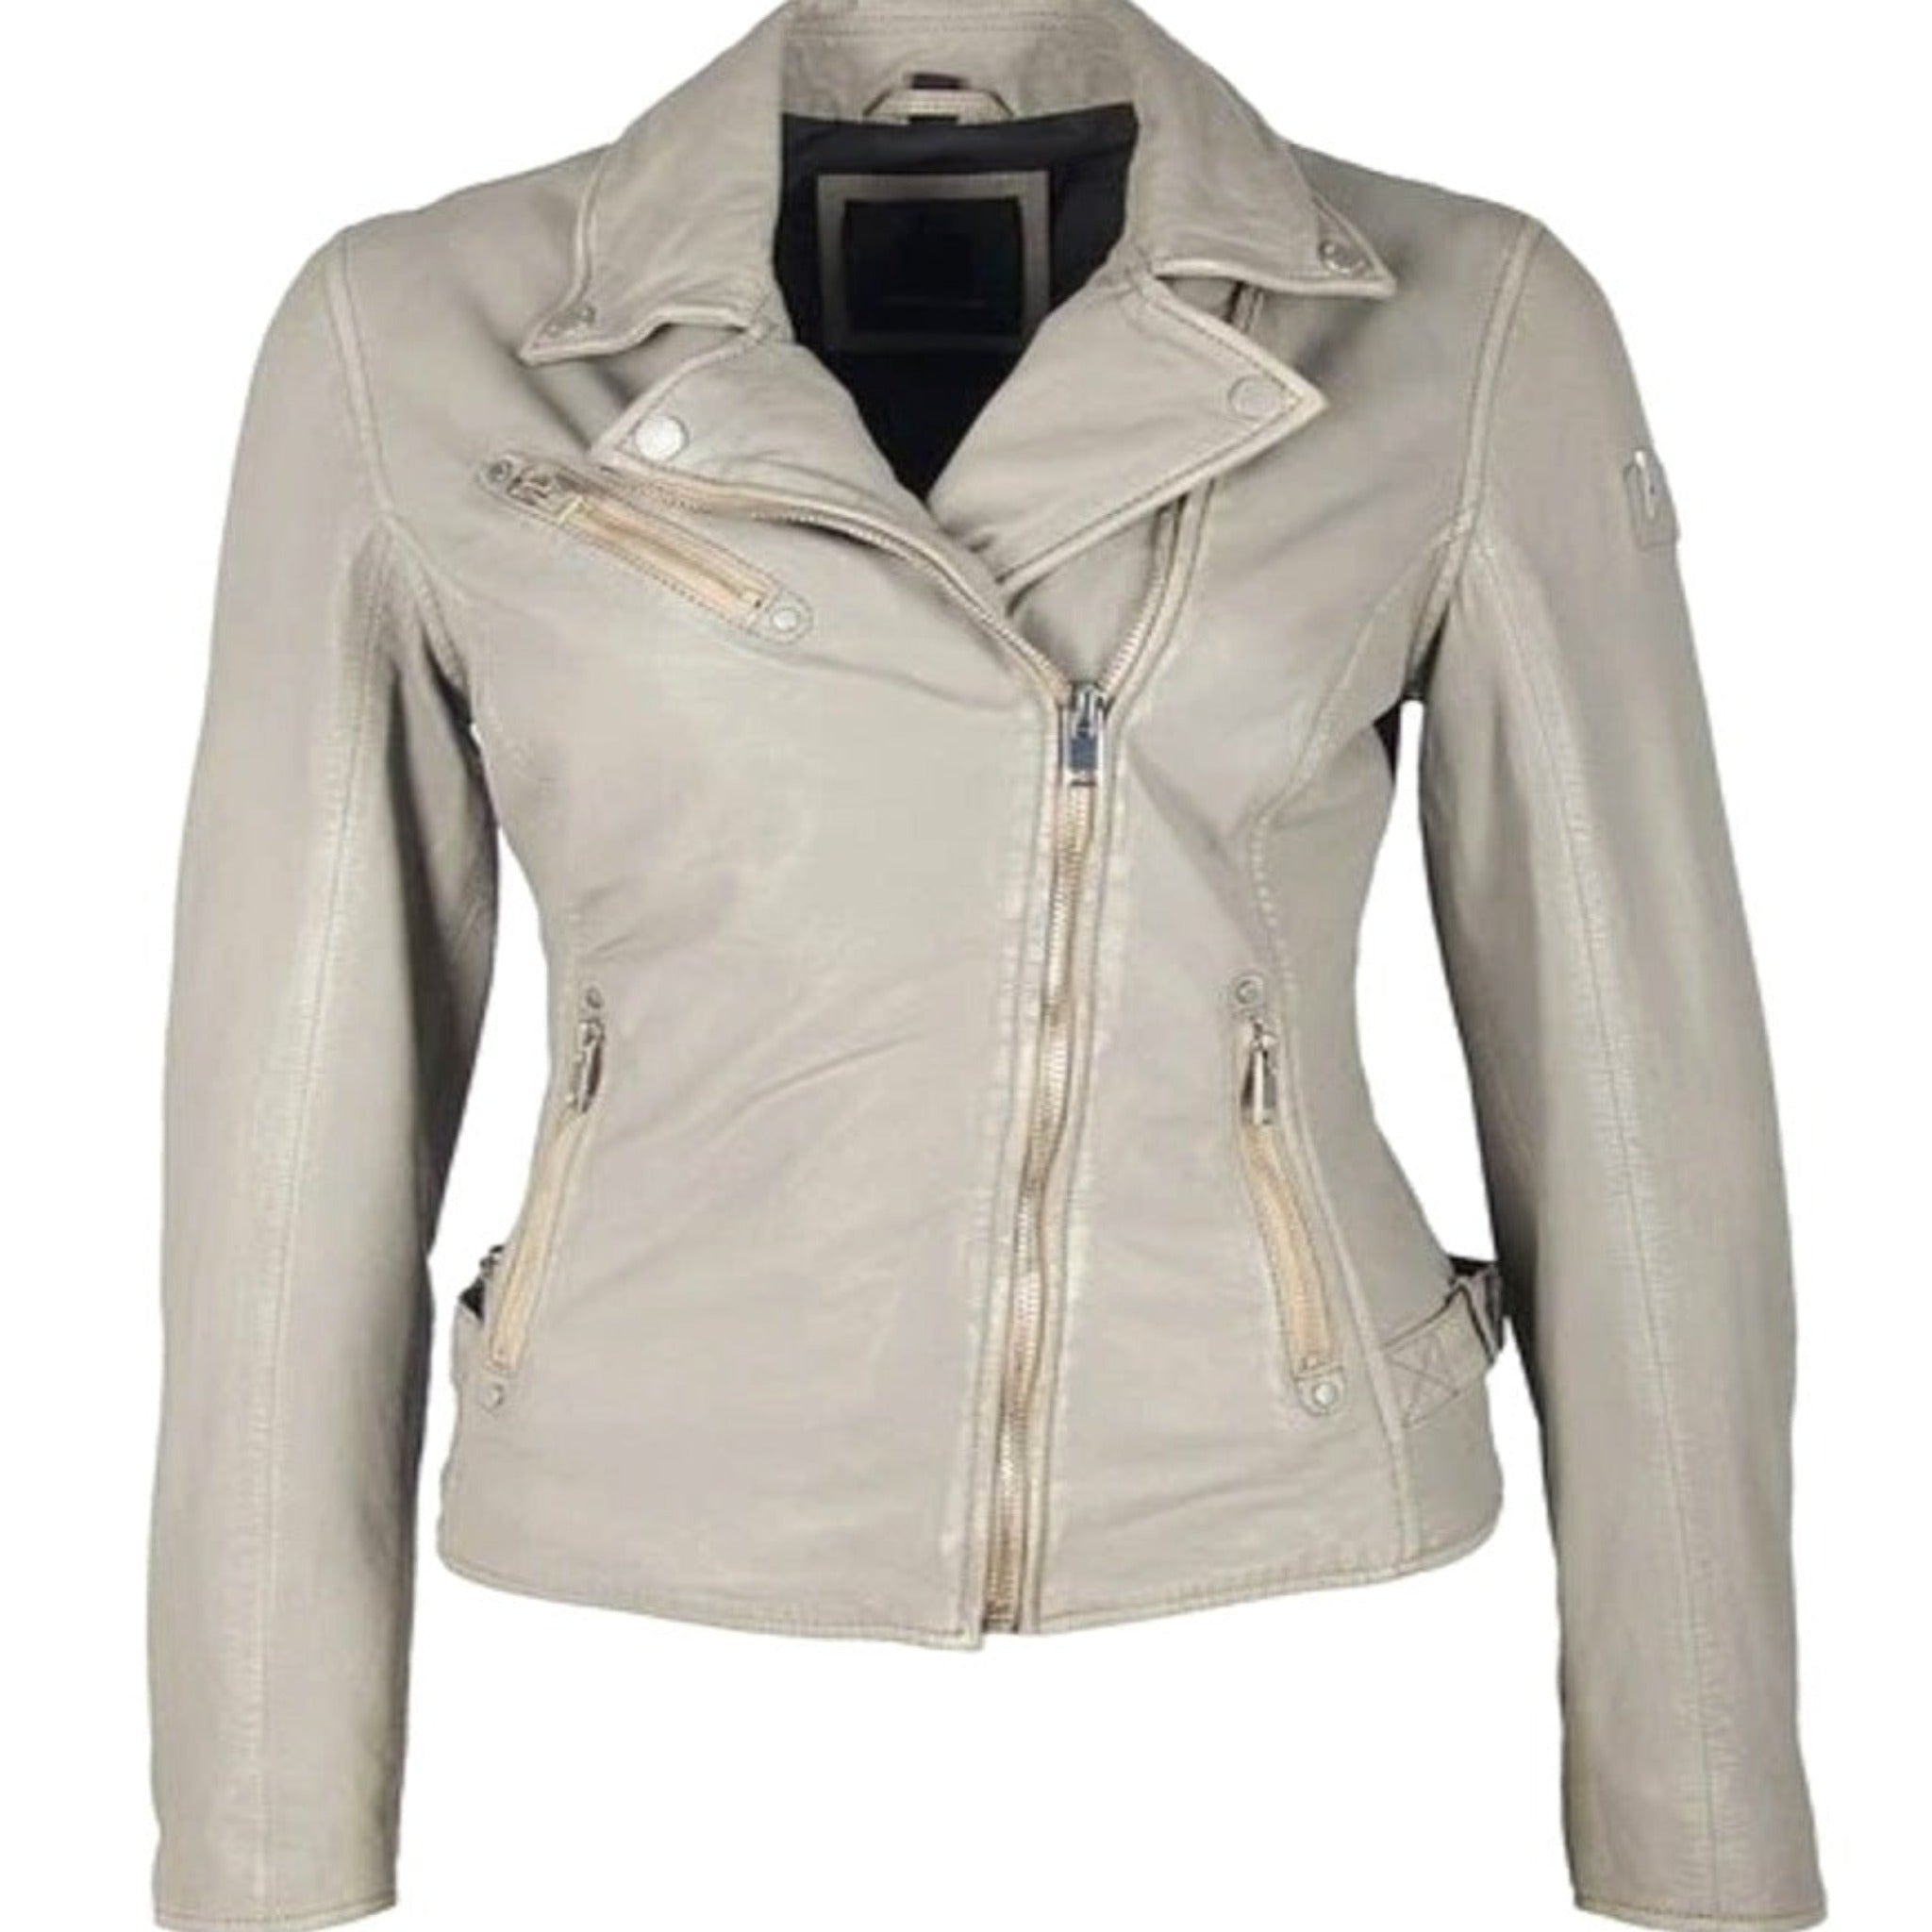 Off-White leather jacket Archives - STYLE DU MONDE